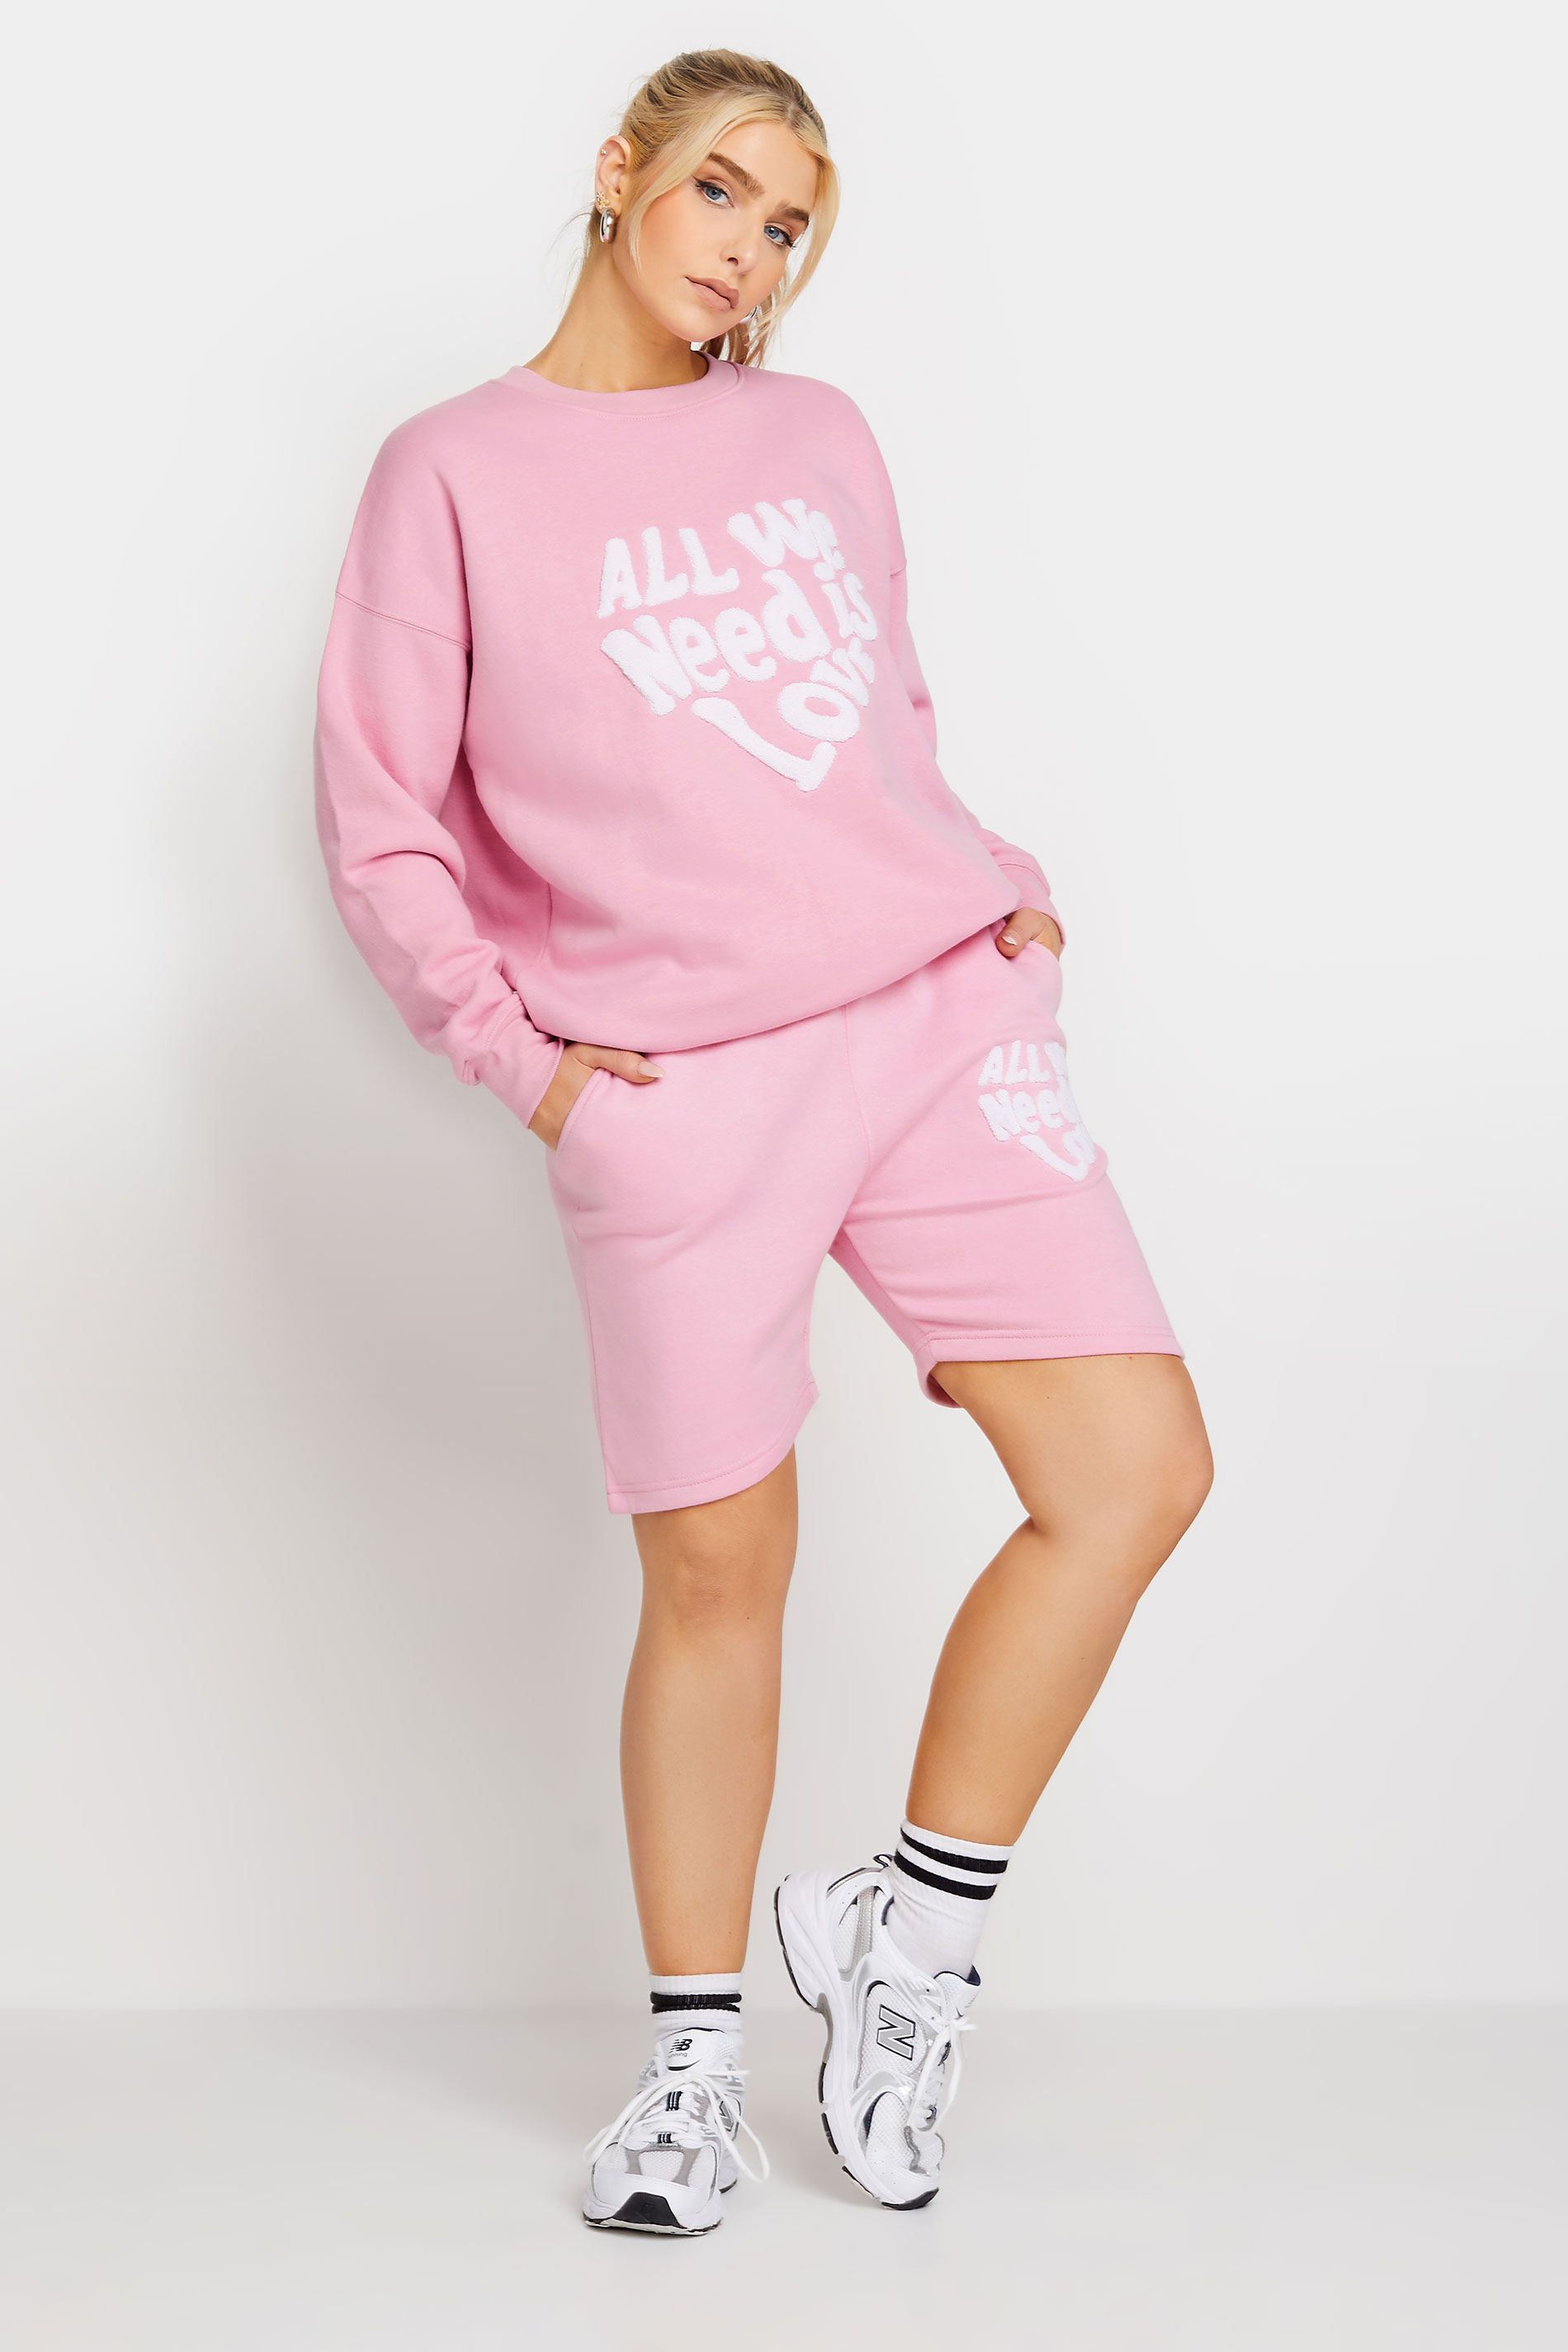 Pink 'All We Need Is Love' Slogan Jogger Shorts | PixieGirl 2